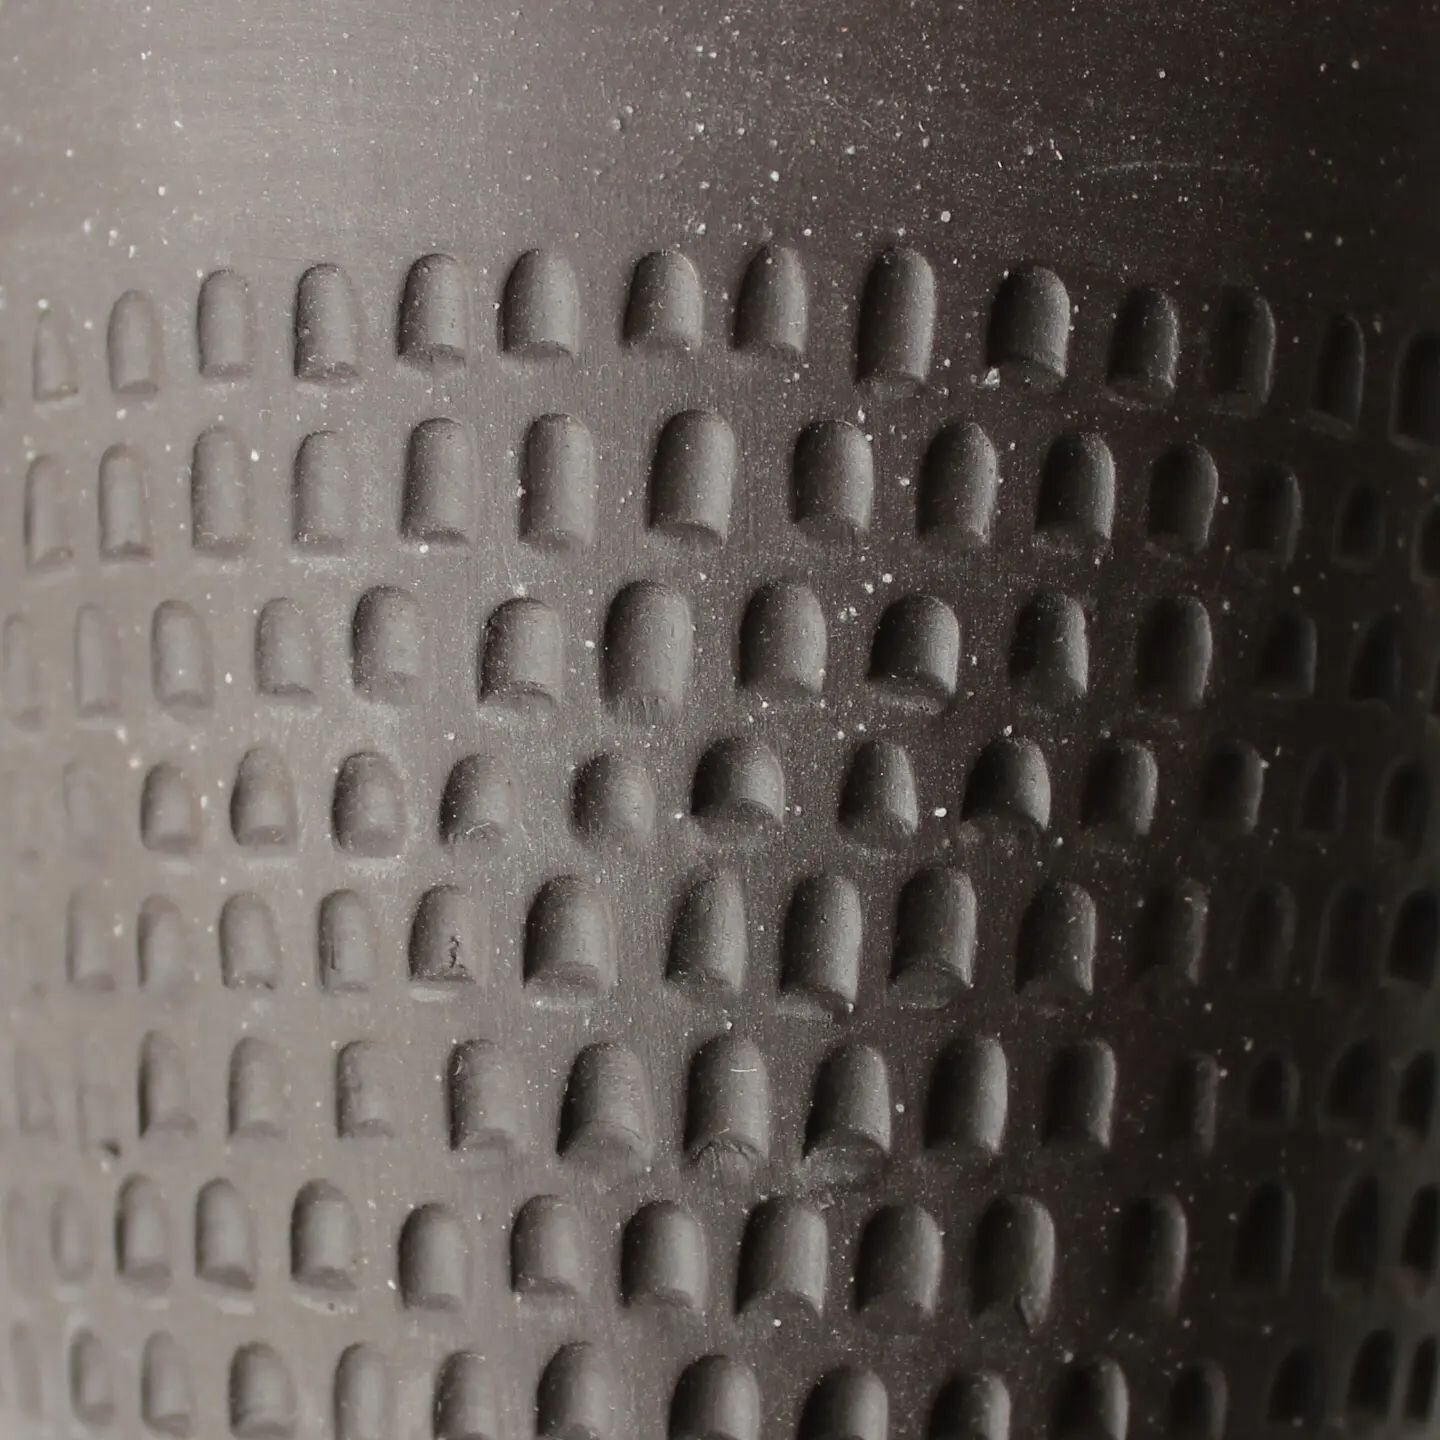 Detail of a black carved drinking vessel.

Texture for decoration, rather than glaze. 

#wheelthrownceramics #australianceramics #pottery #handmadeceramics #carvedtumbler #cremerging  #melbourneartist #madeinthornbury